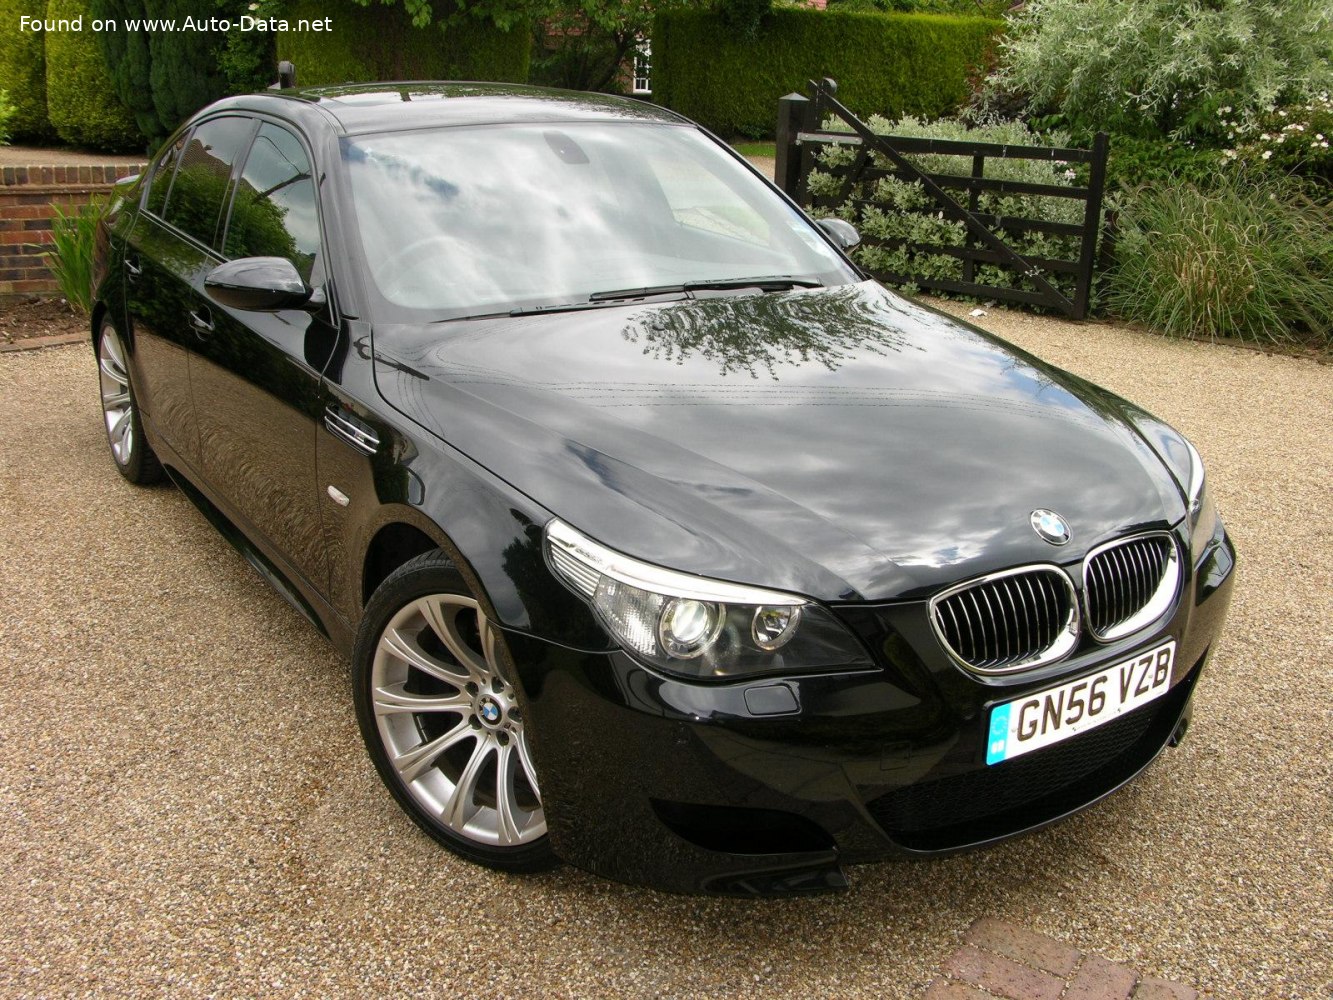 BMW M5 (2005) - pictures, information & specs